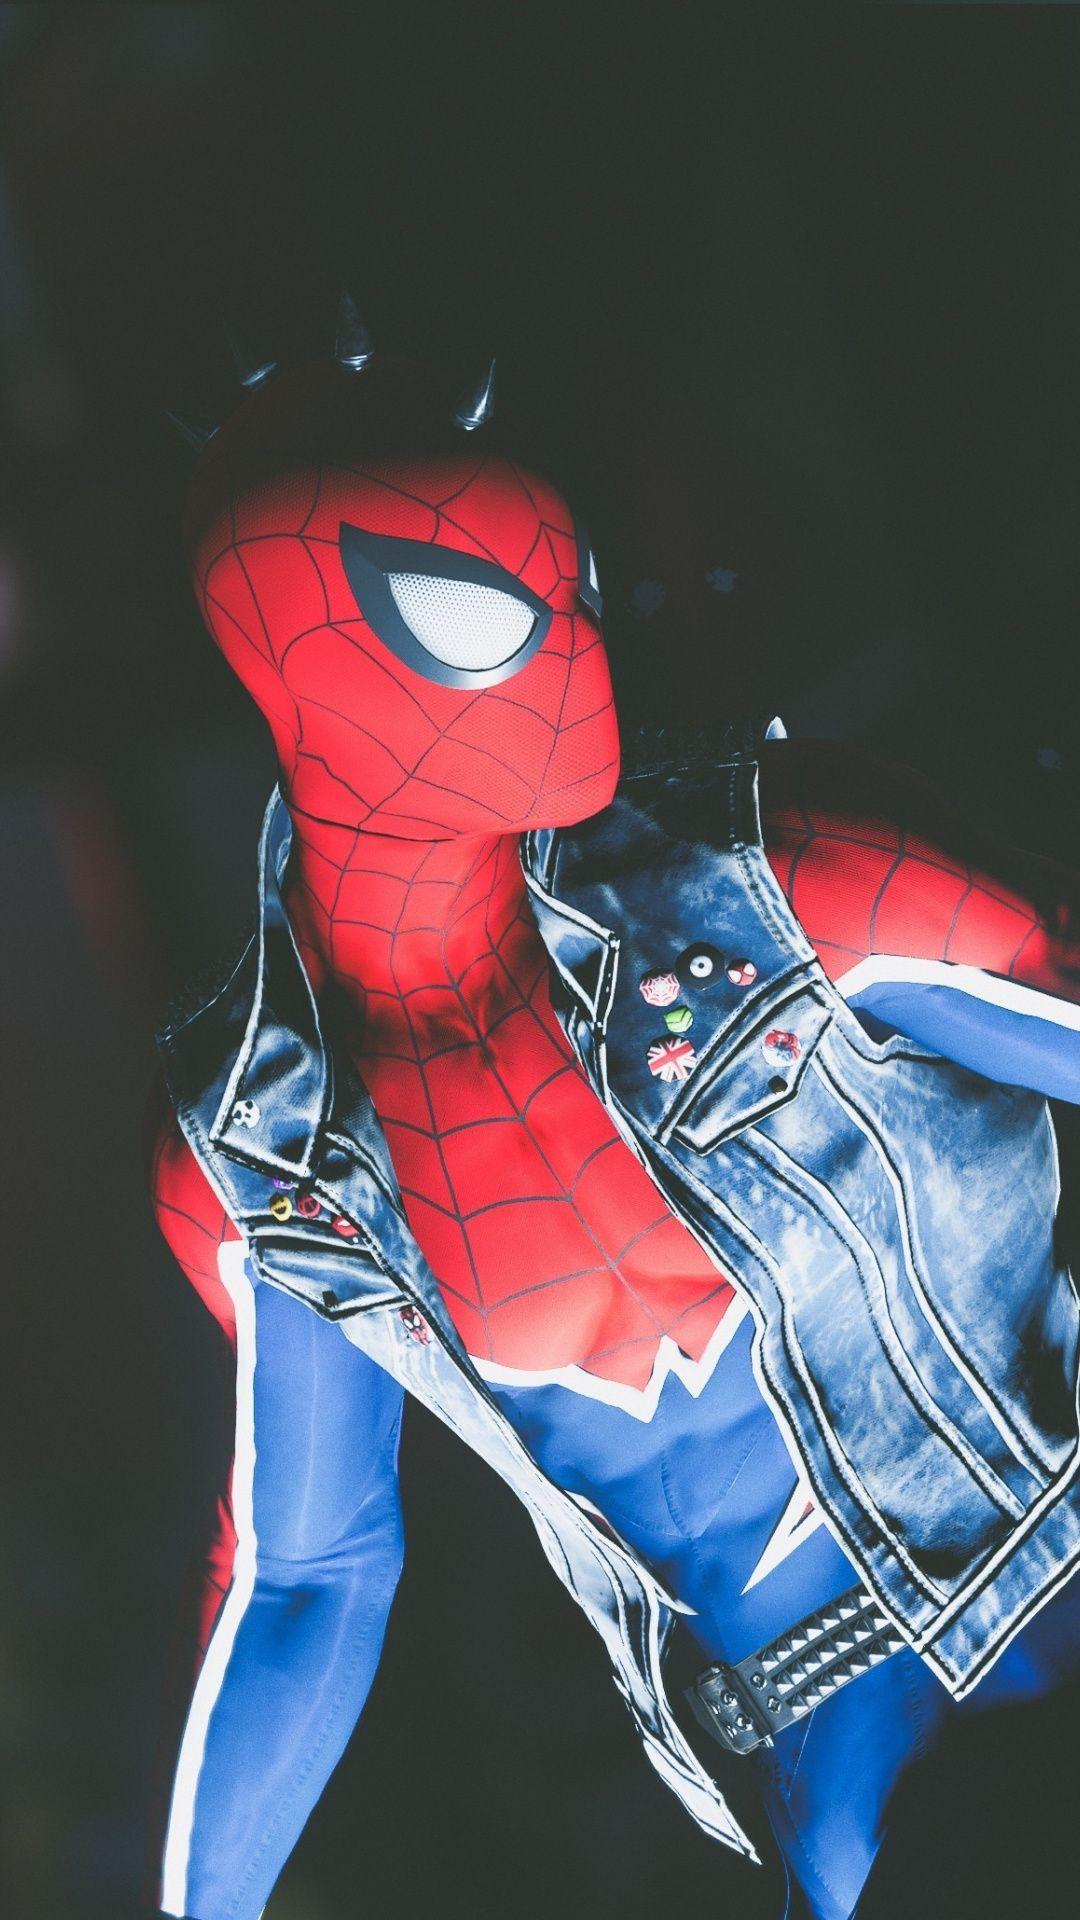 Spider-Punk is a step forward for Black British representation